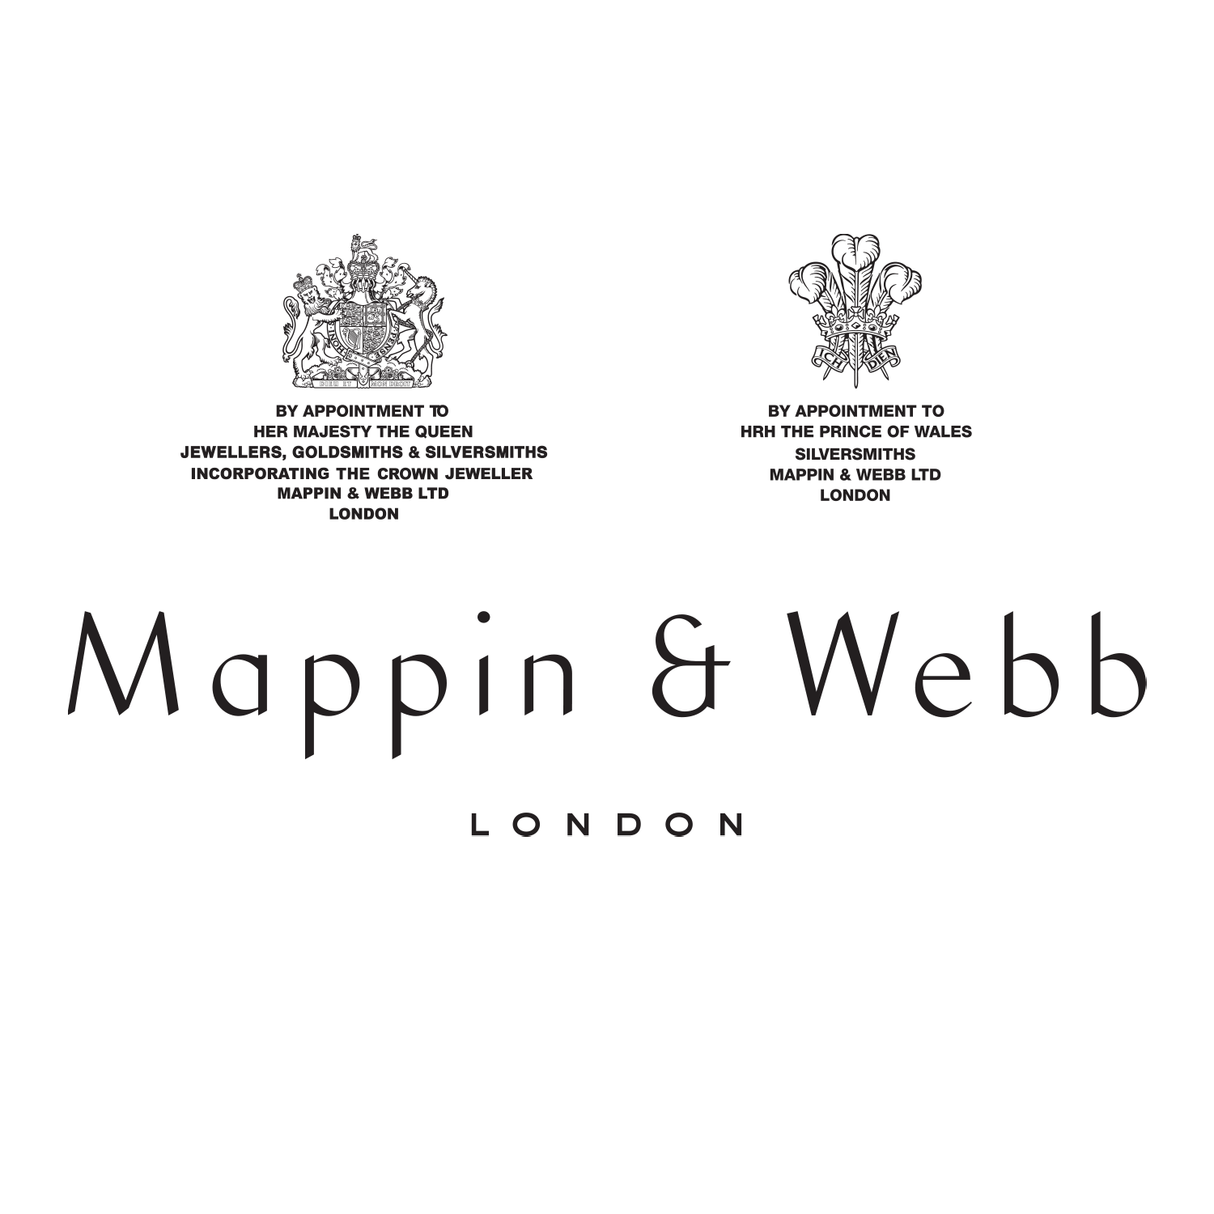 Mappin & Webb Team GB Sterling Silver Union Jack Keyring